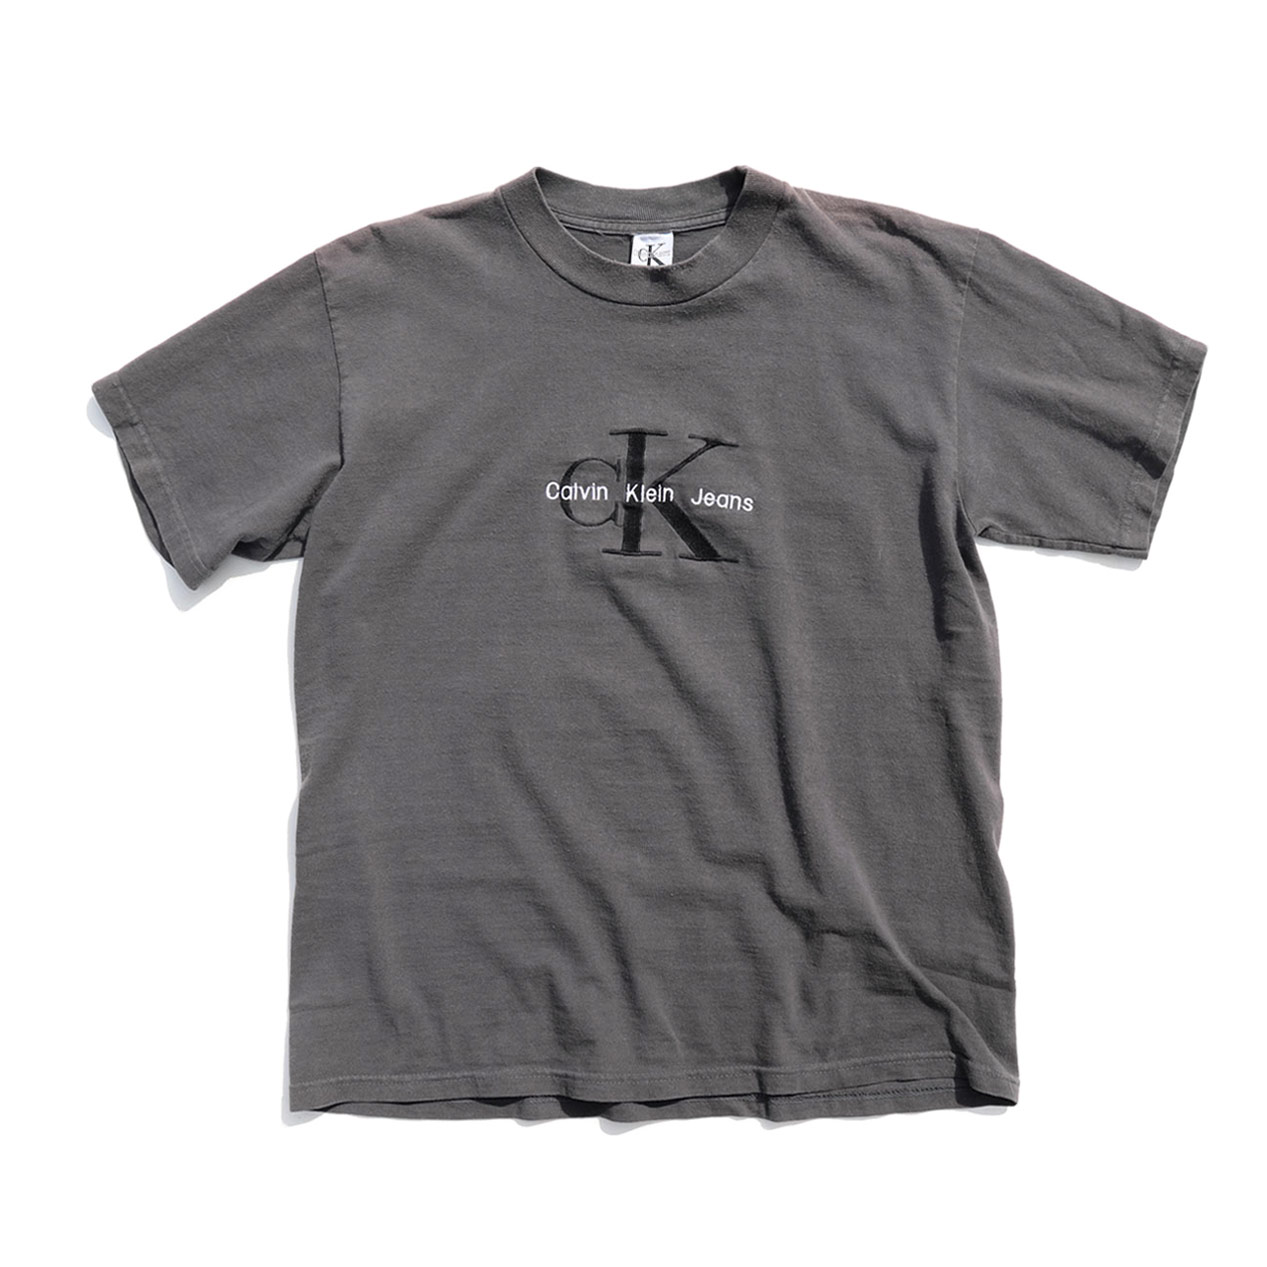 POST JUNK / 90's ブート CALVIN KLEIN JEANS USA製 刺繍ロゴ Tシャツ [L]